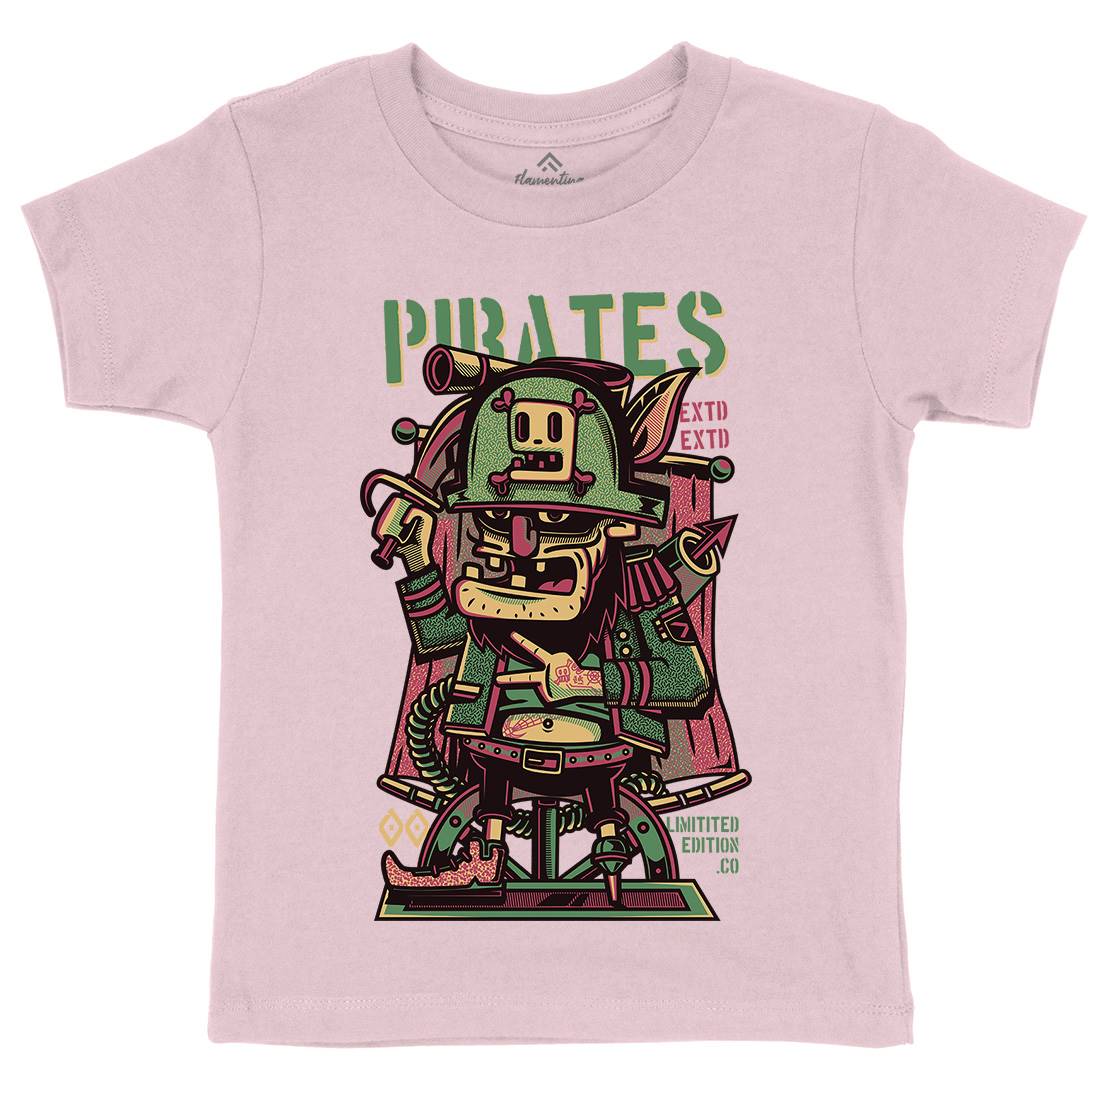 Pirates Kids Crew Neck T-Shirt Navy D678